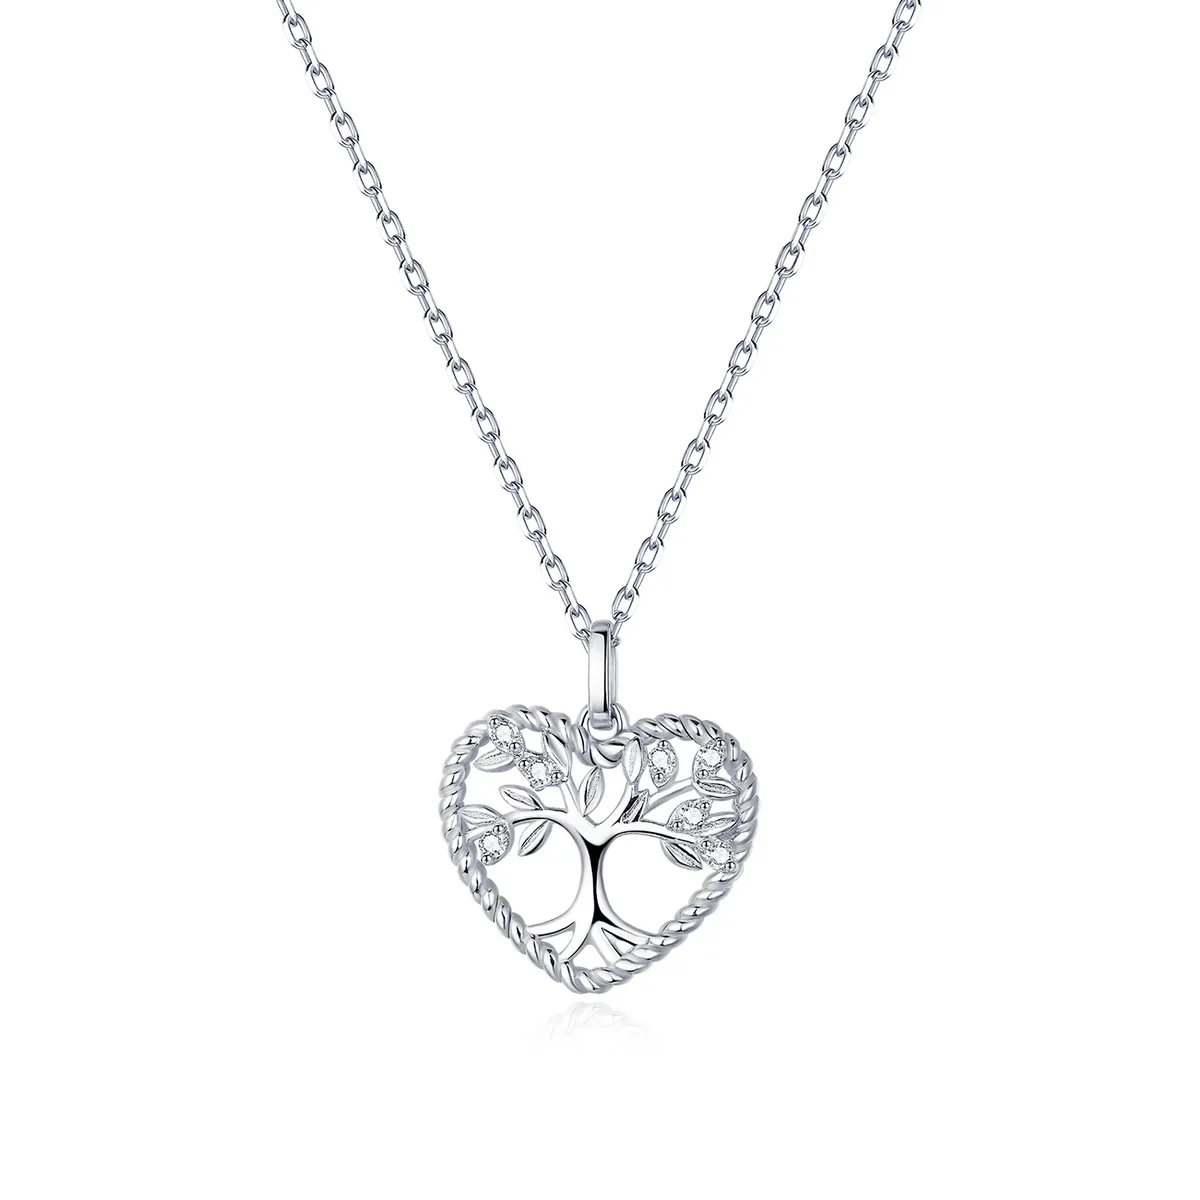 Pandora Style Silver Tree of Life Pendant Necklace - BSN176